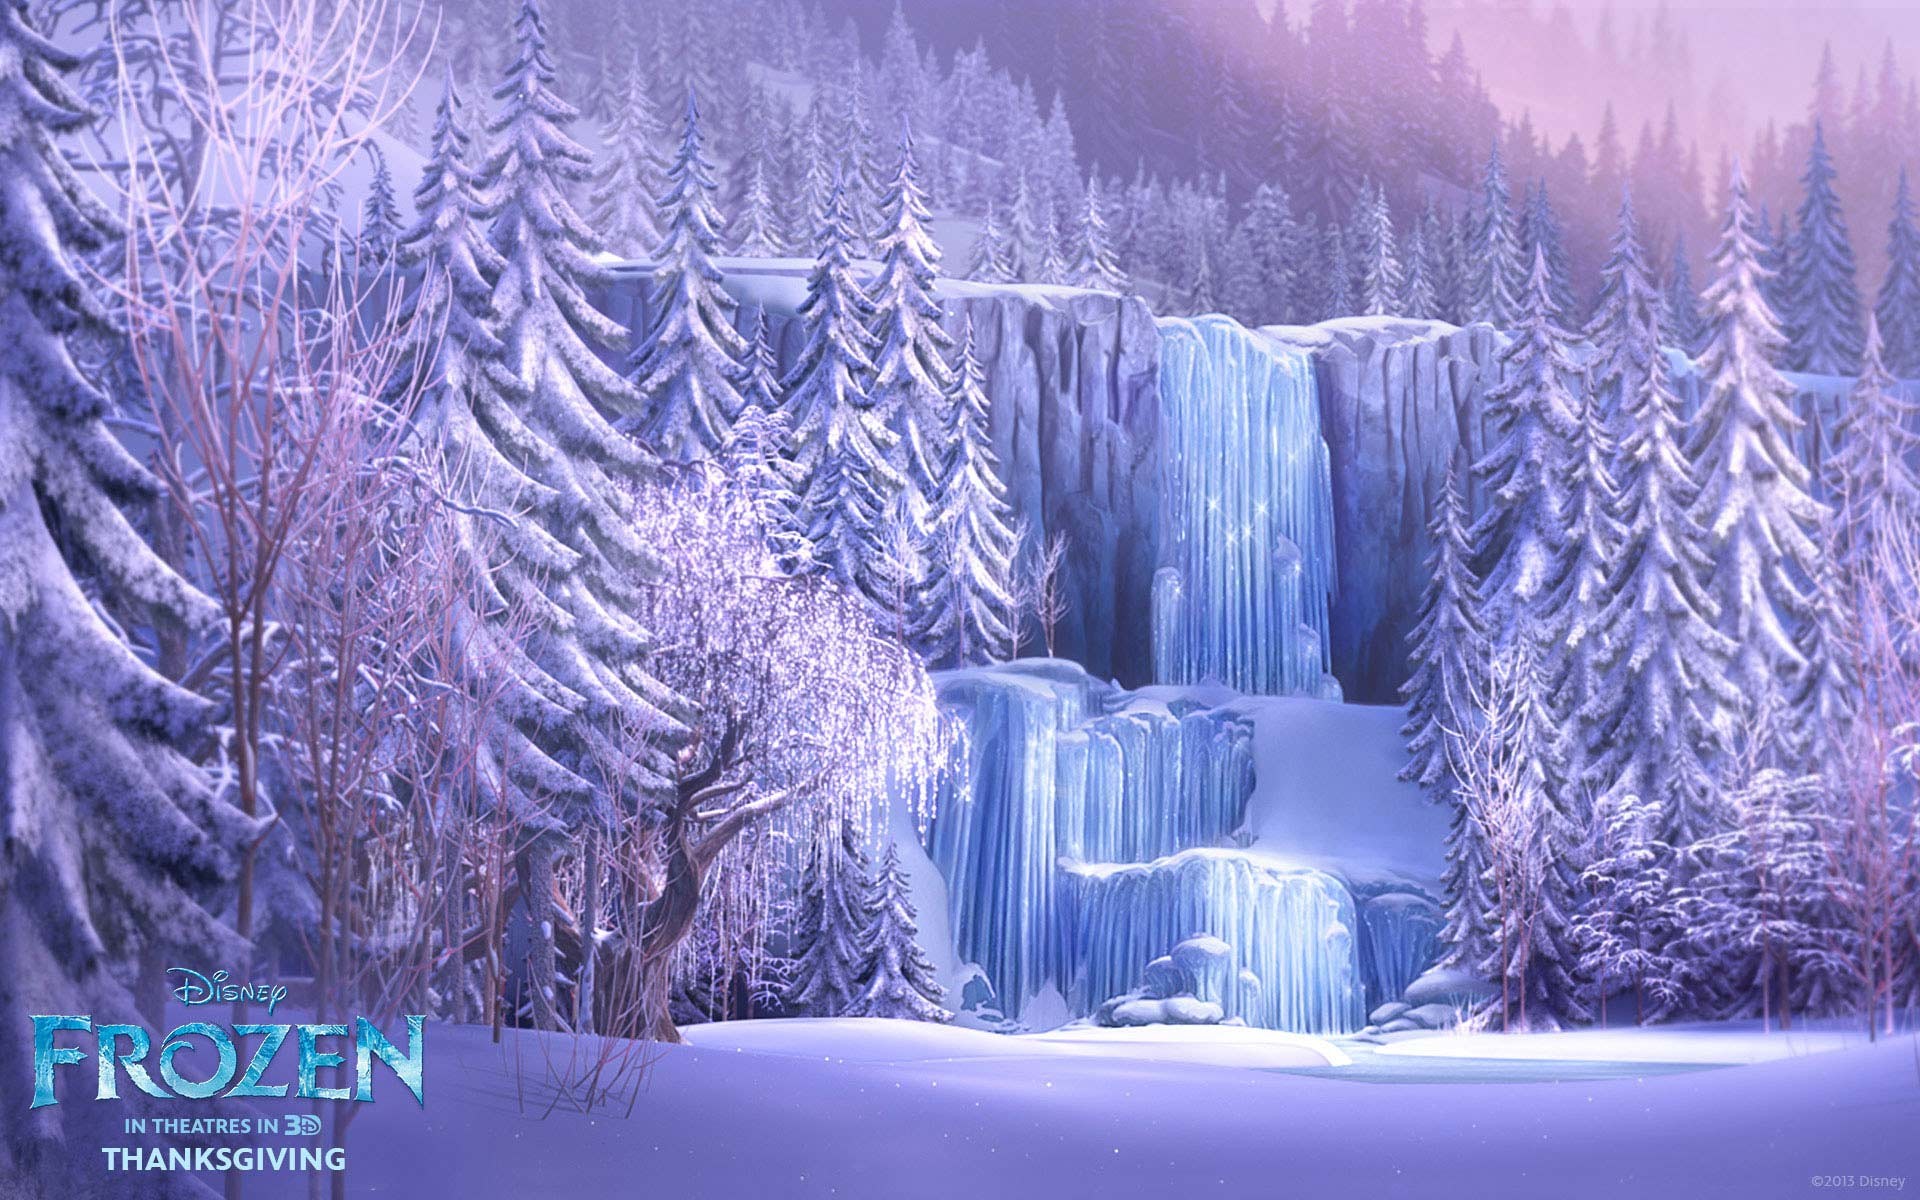 1920x1200 Disney Frozen Movie Waterfall HD Wallpaper Image for iPad mini 3